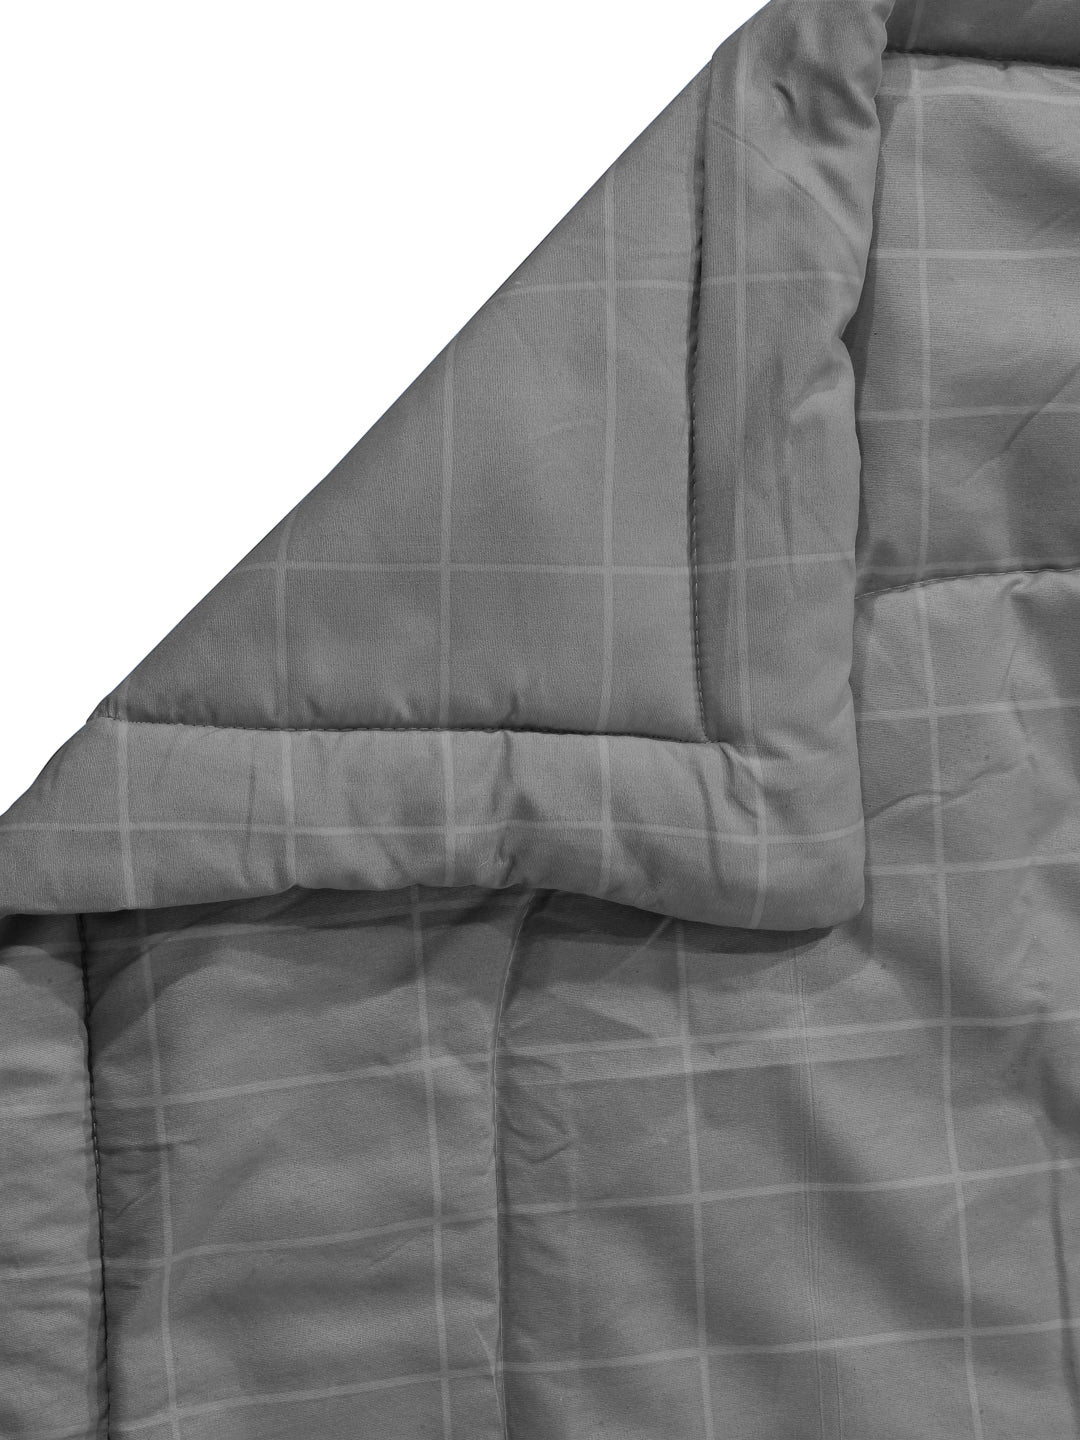 Arrabi Grey Check TC Cotton Blend Double Size Comforter Bedding Set with 2 Pillow Cover